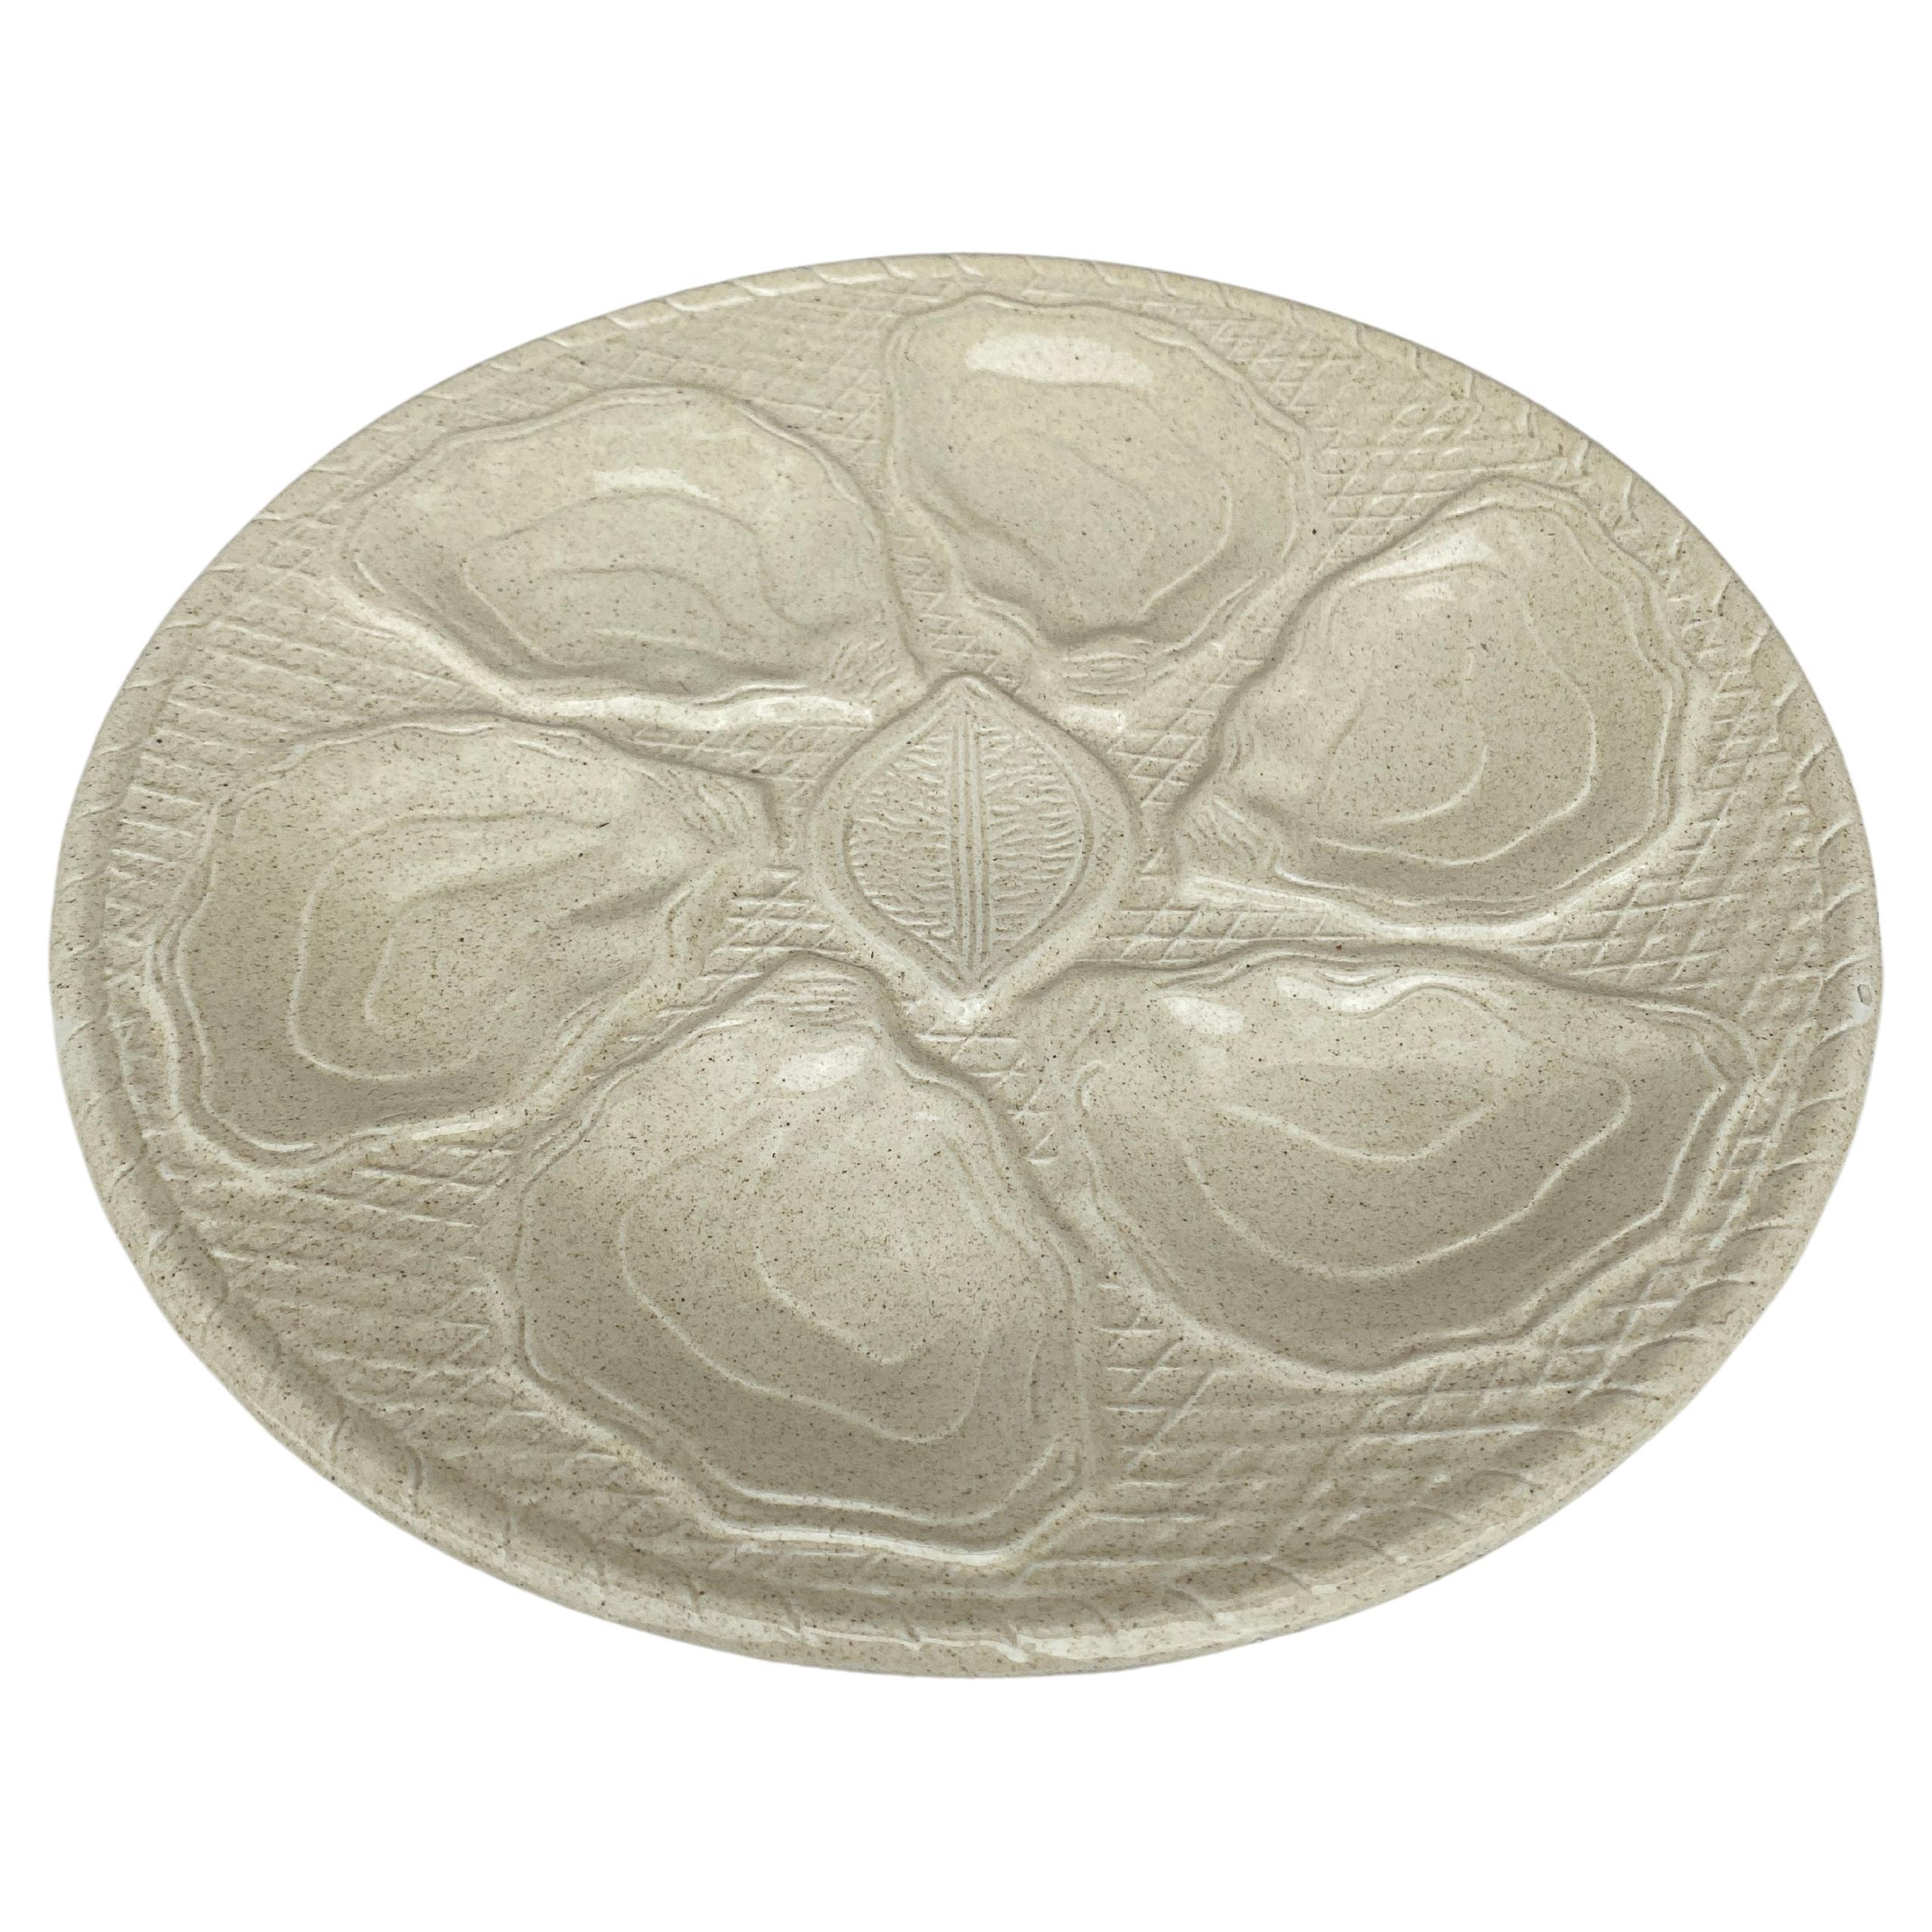 Mid-Century French Ecru Majolica Oyster Plate .
Lemon on the center.